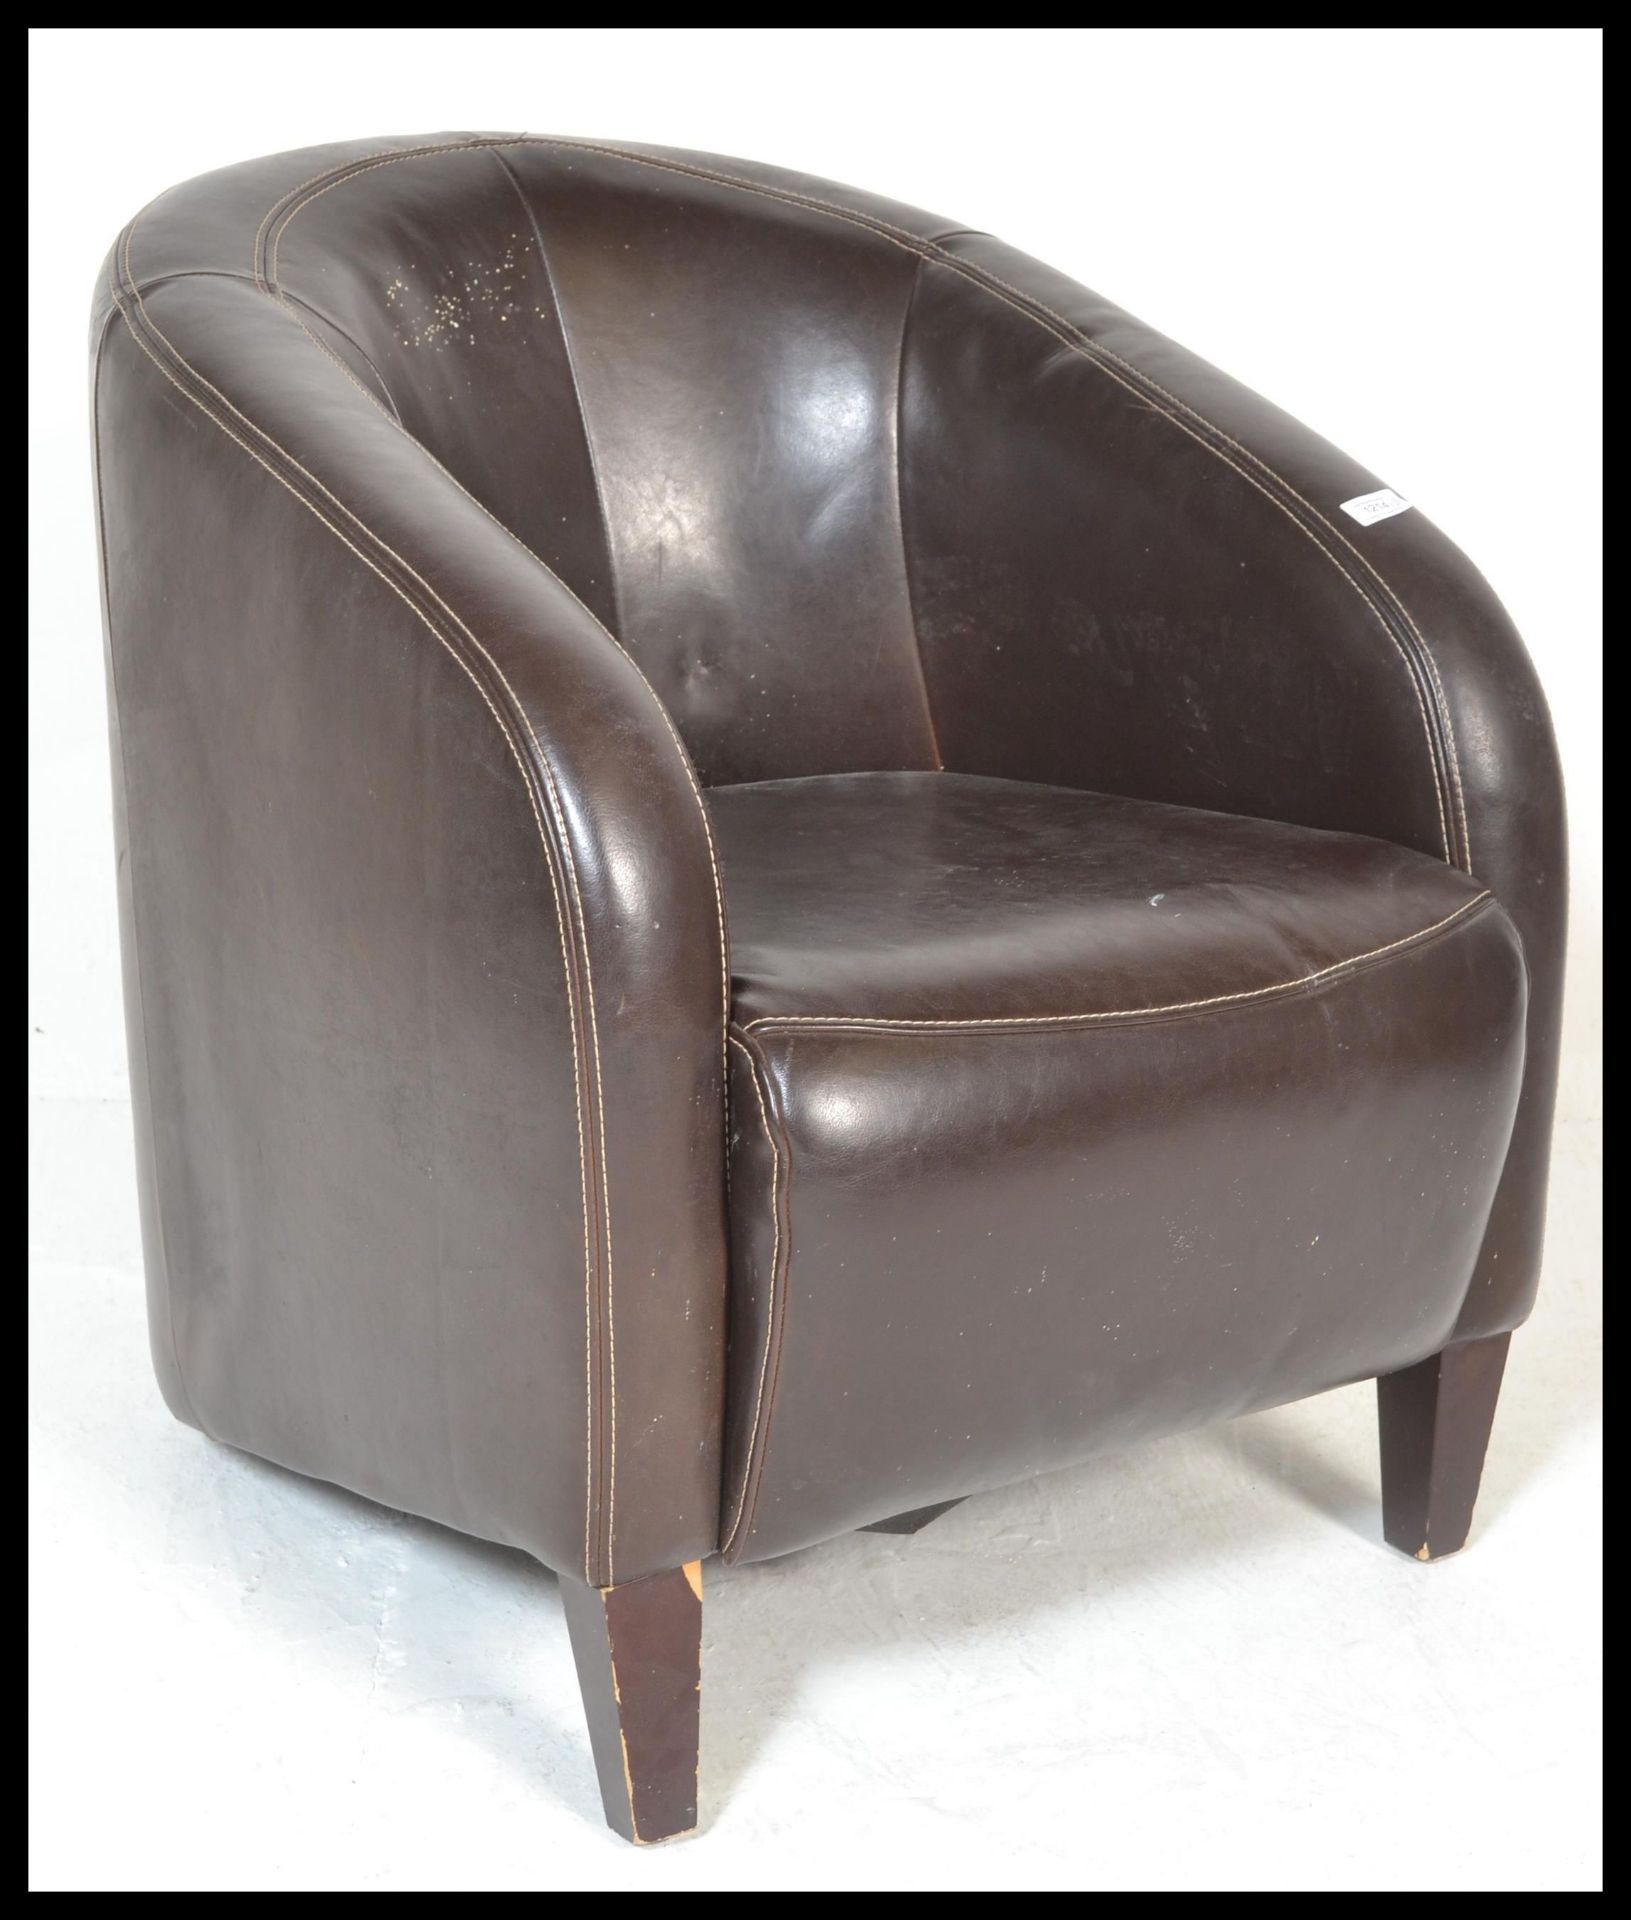 A contemporary leather tub chair / armchair. Raise